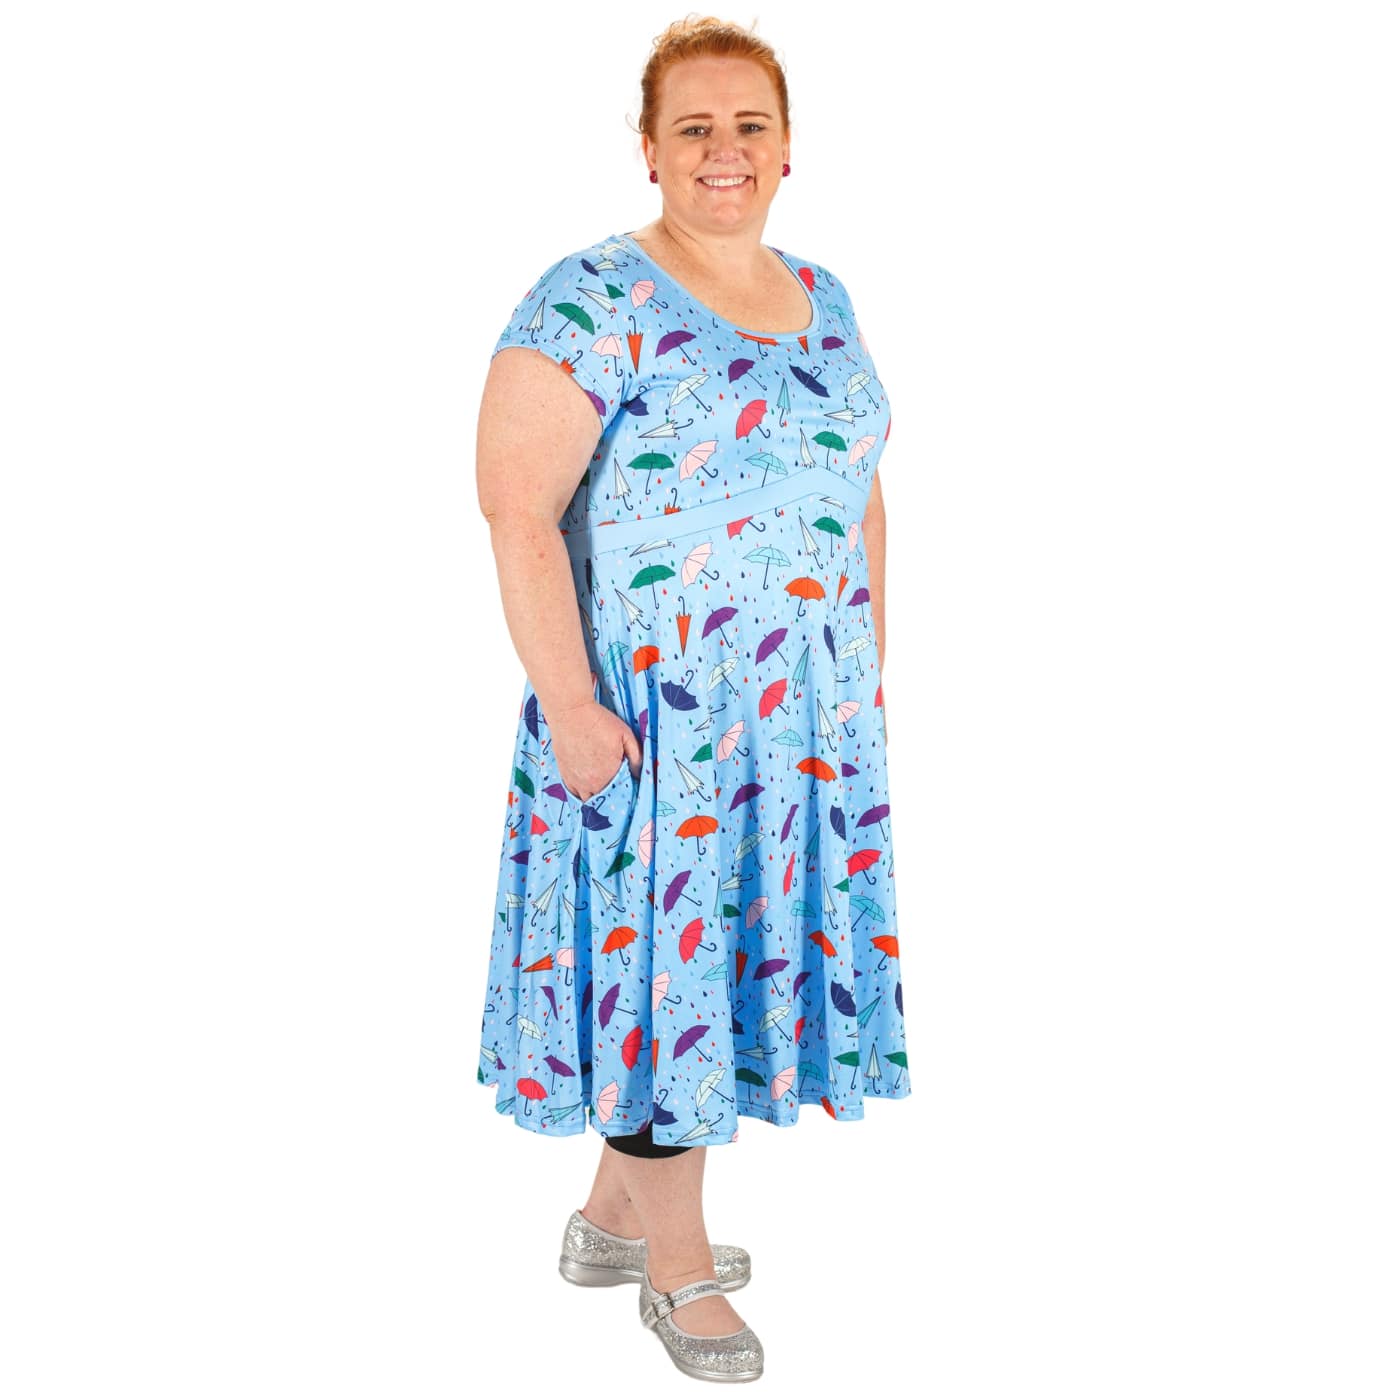 Brolly Tea Dress by RainbowsAndFairies.com (Umbrella - Rain - Raindrops - Dress With Pockets - Rockabilly - Vintage Inspired) - SKU: CL_TEADR_BROLL_ORG - Pic 05